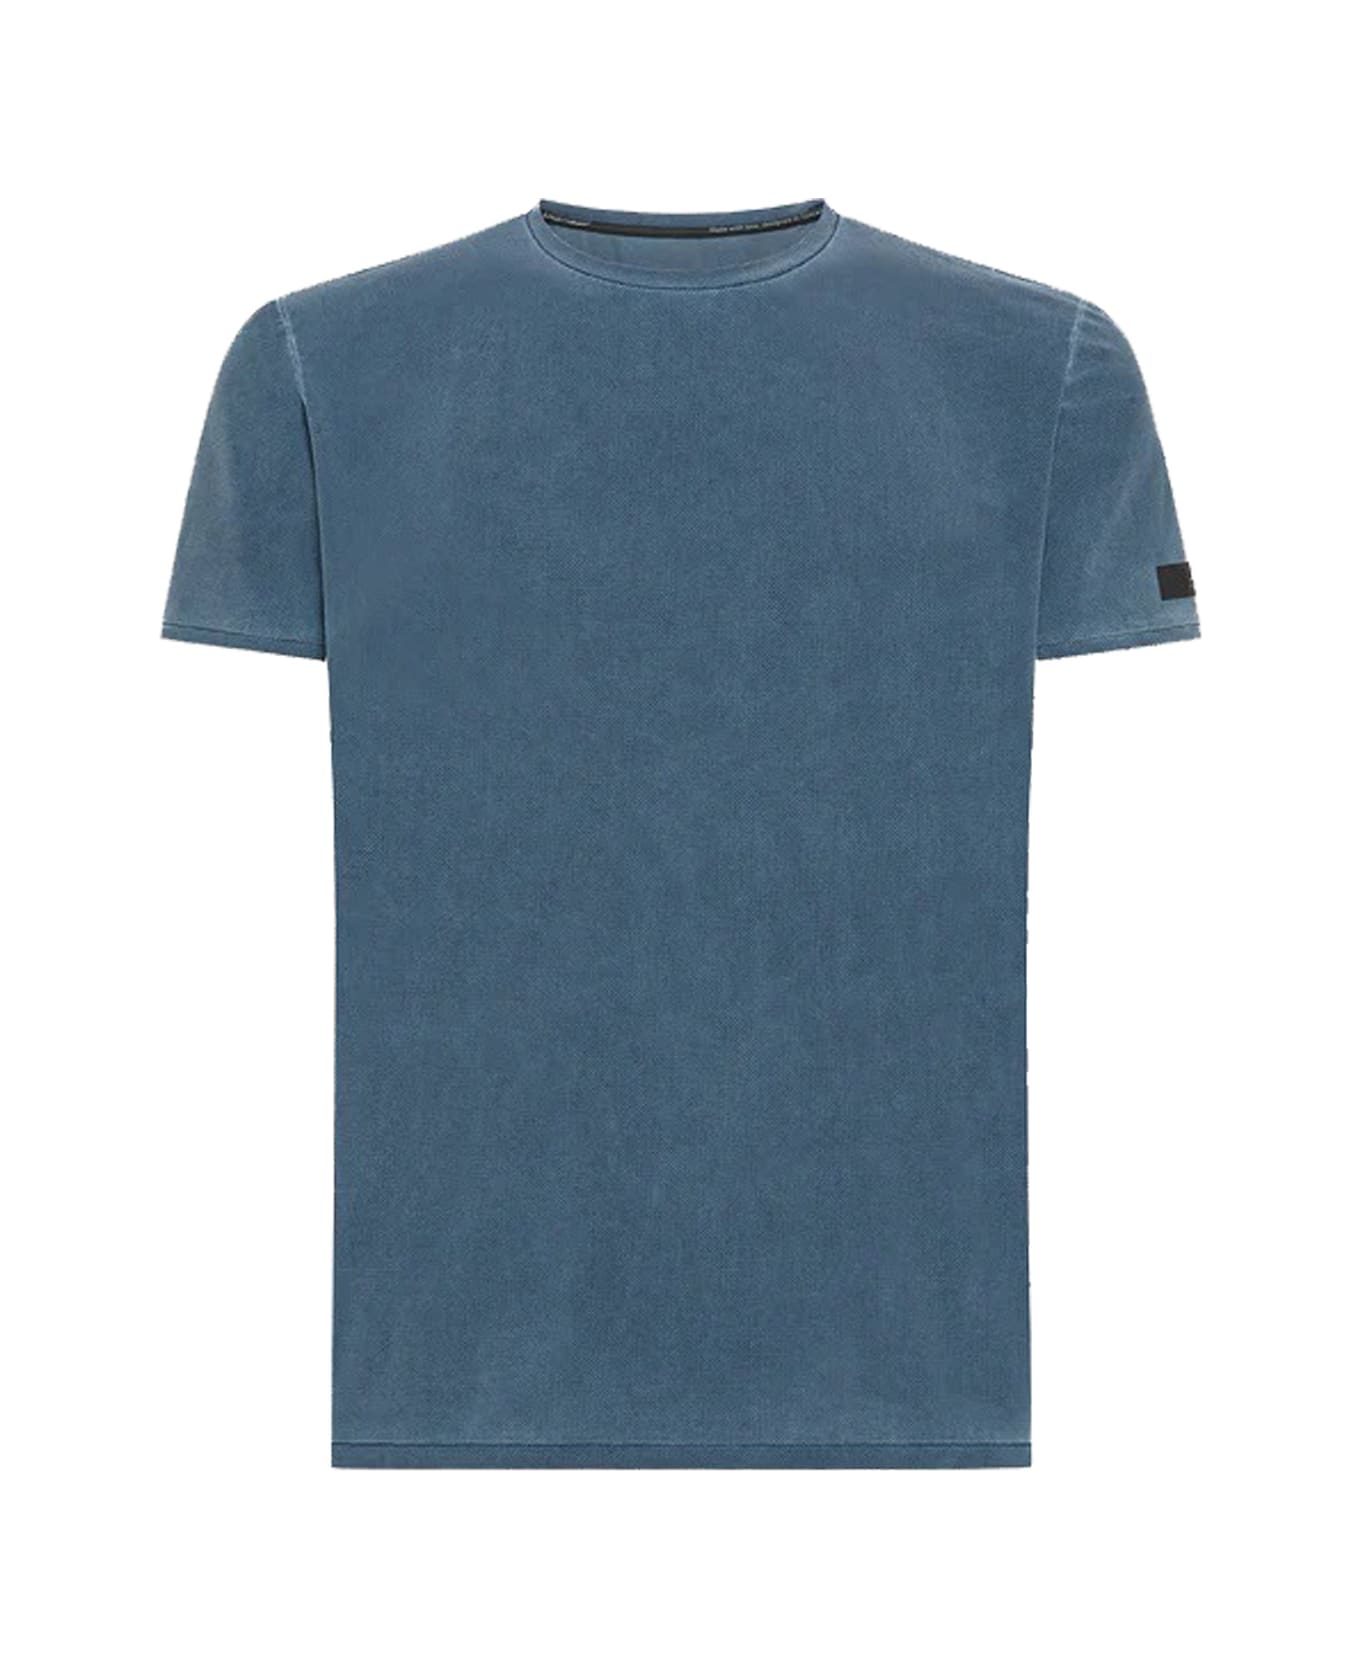 RRD - Roberto Ricci Design T-shirt - Blu